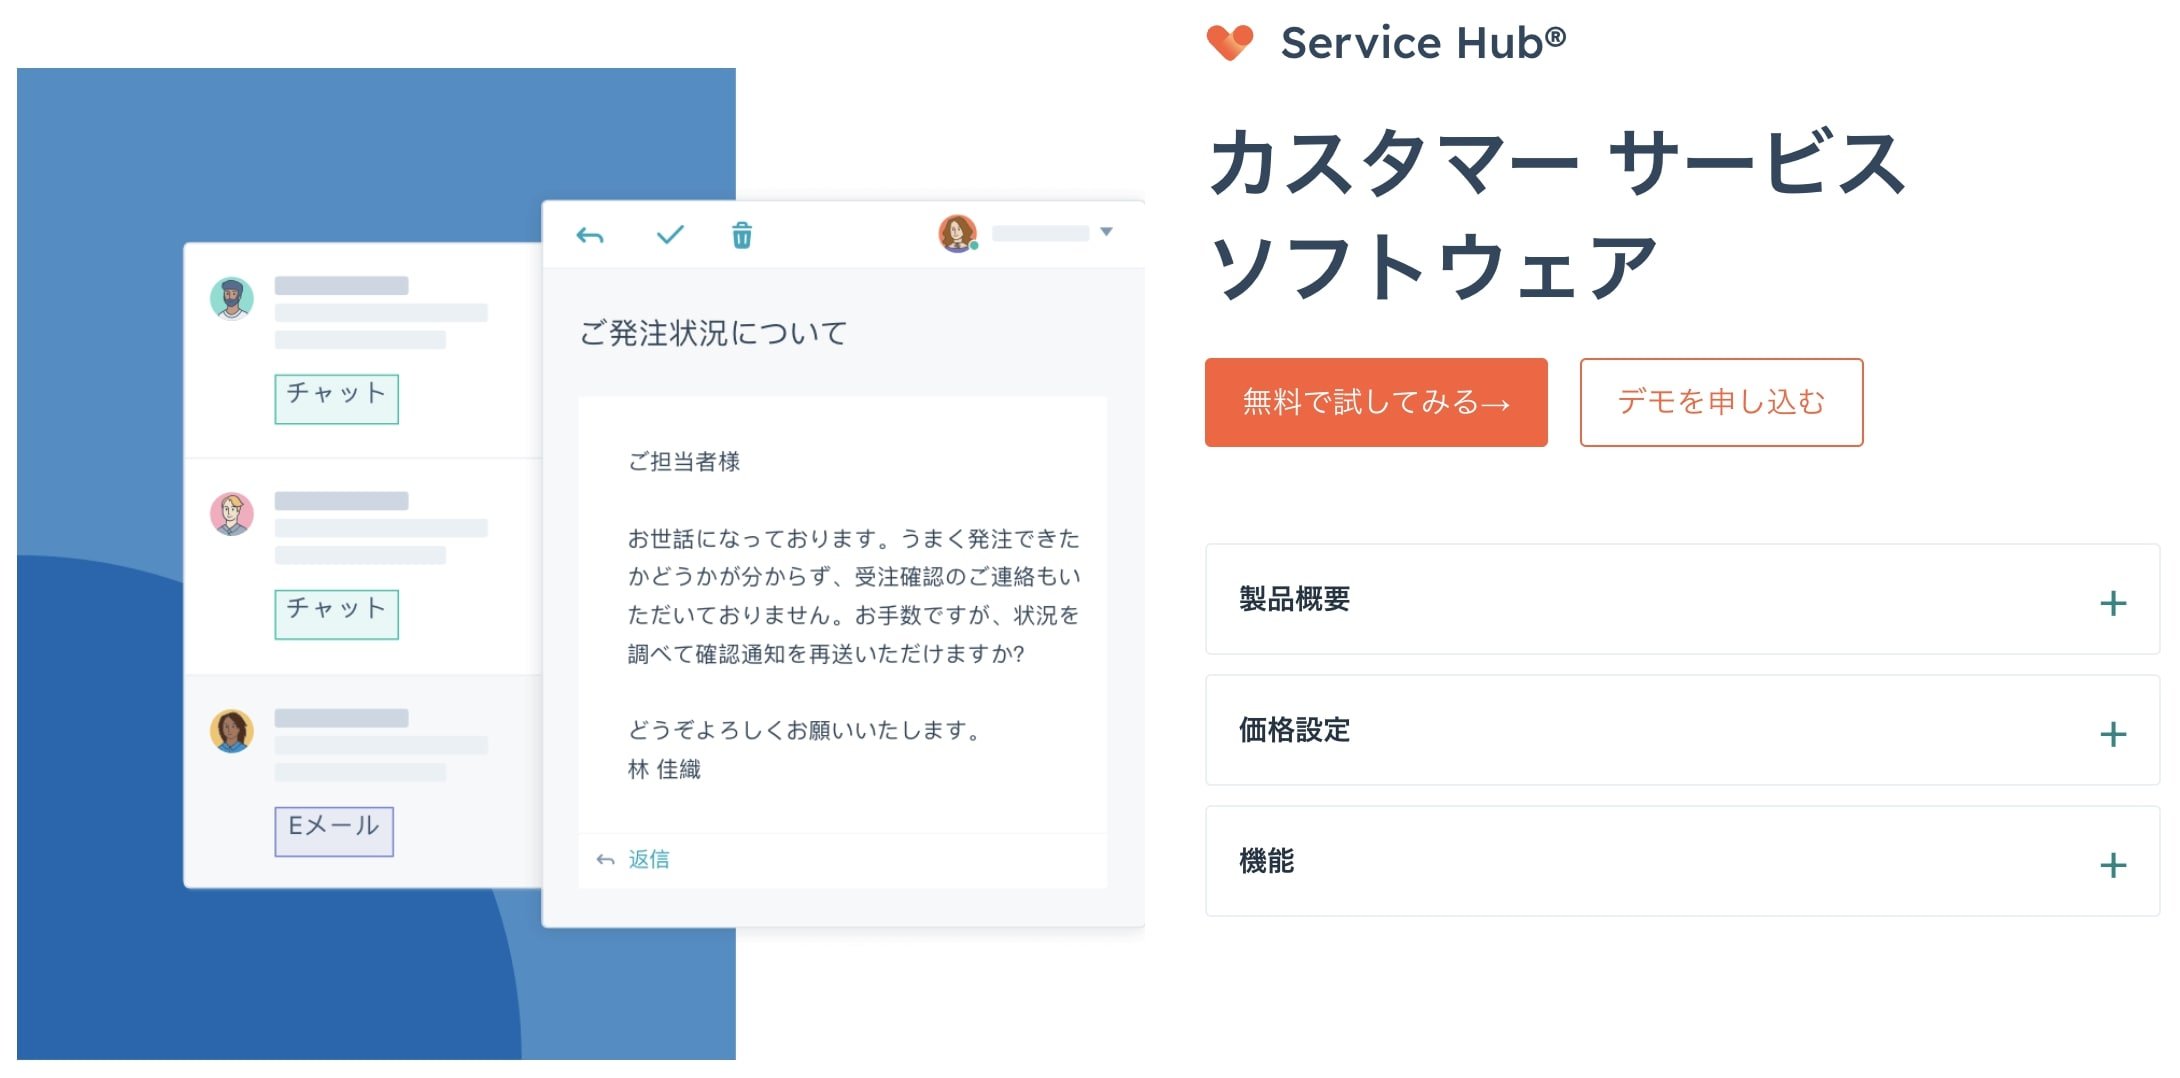 Service Hub公式HP